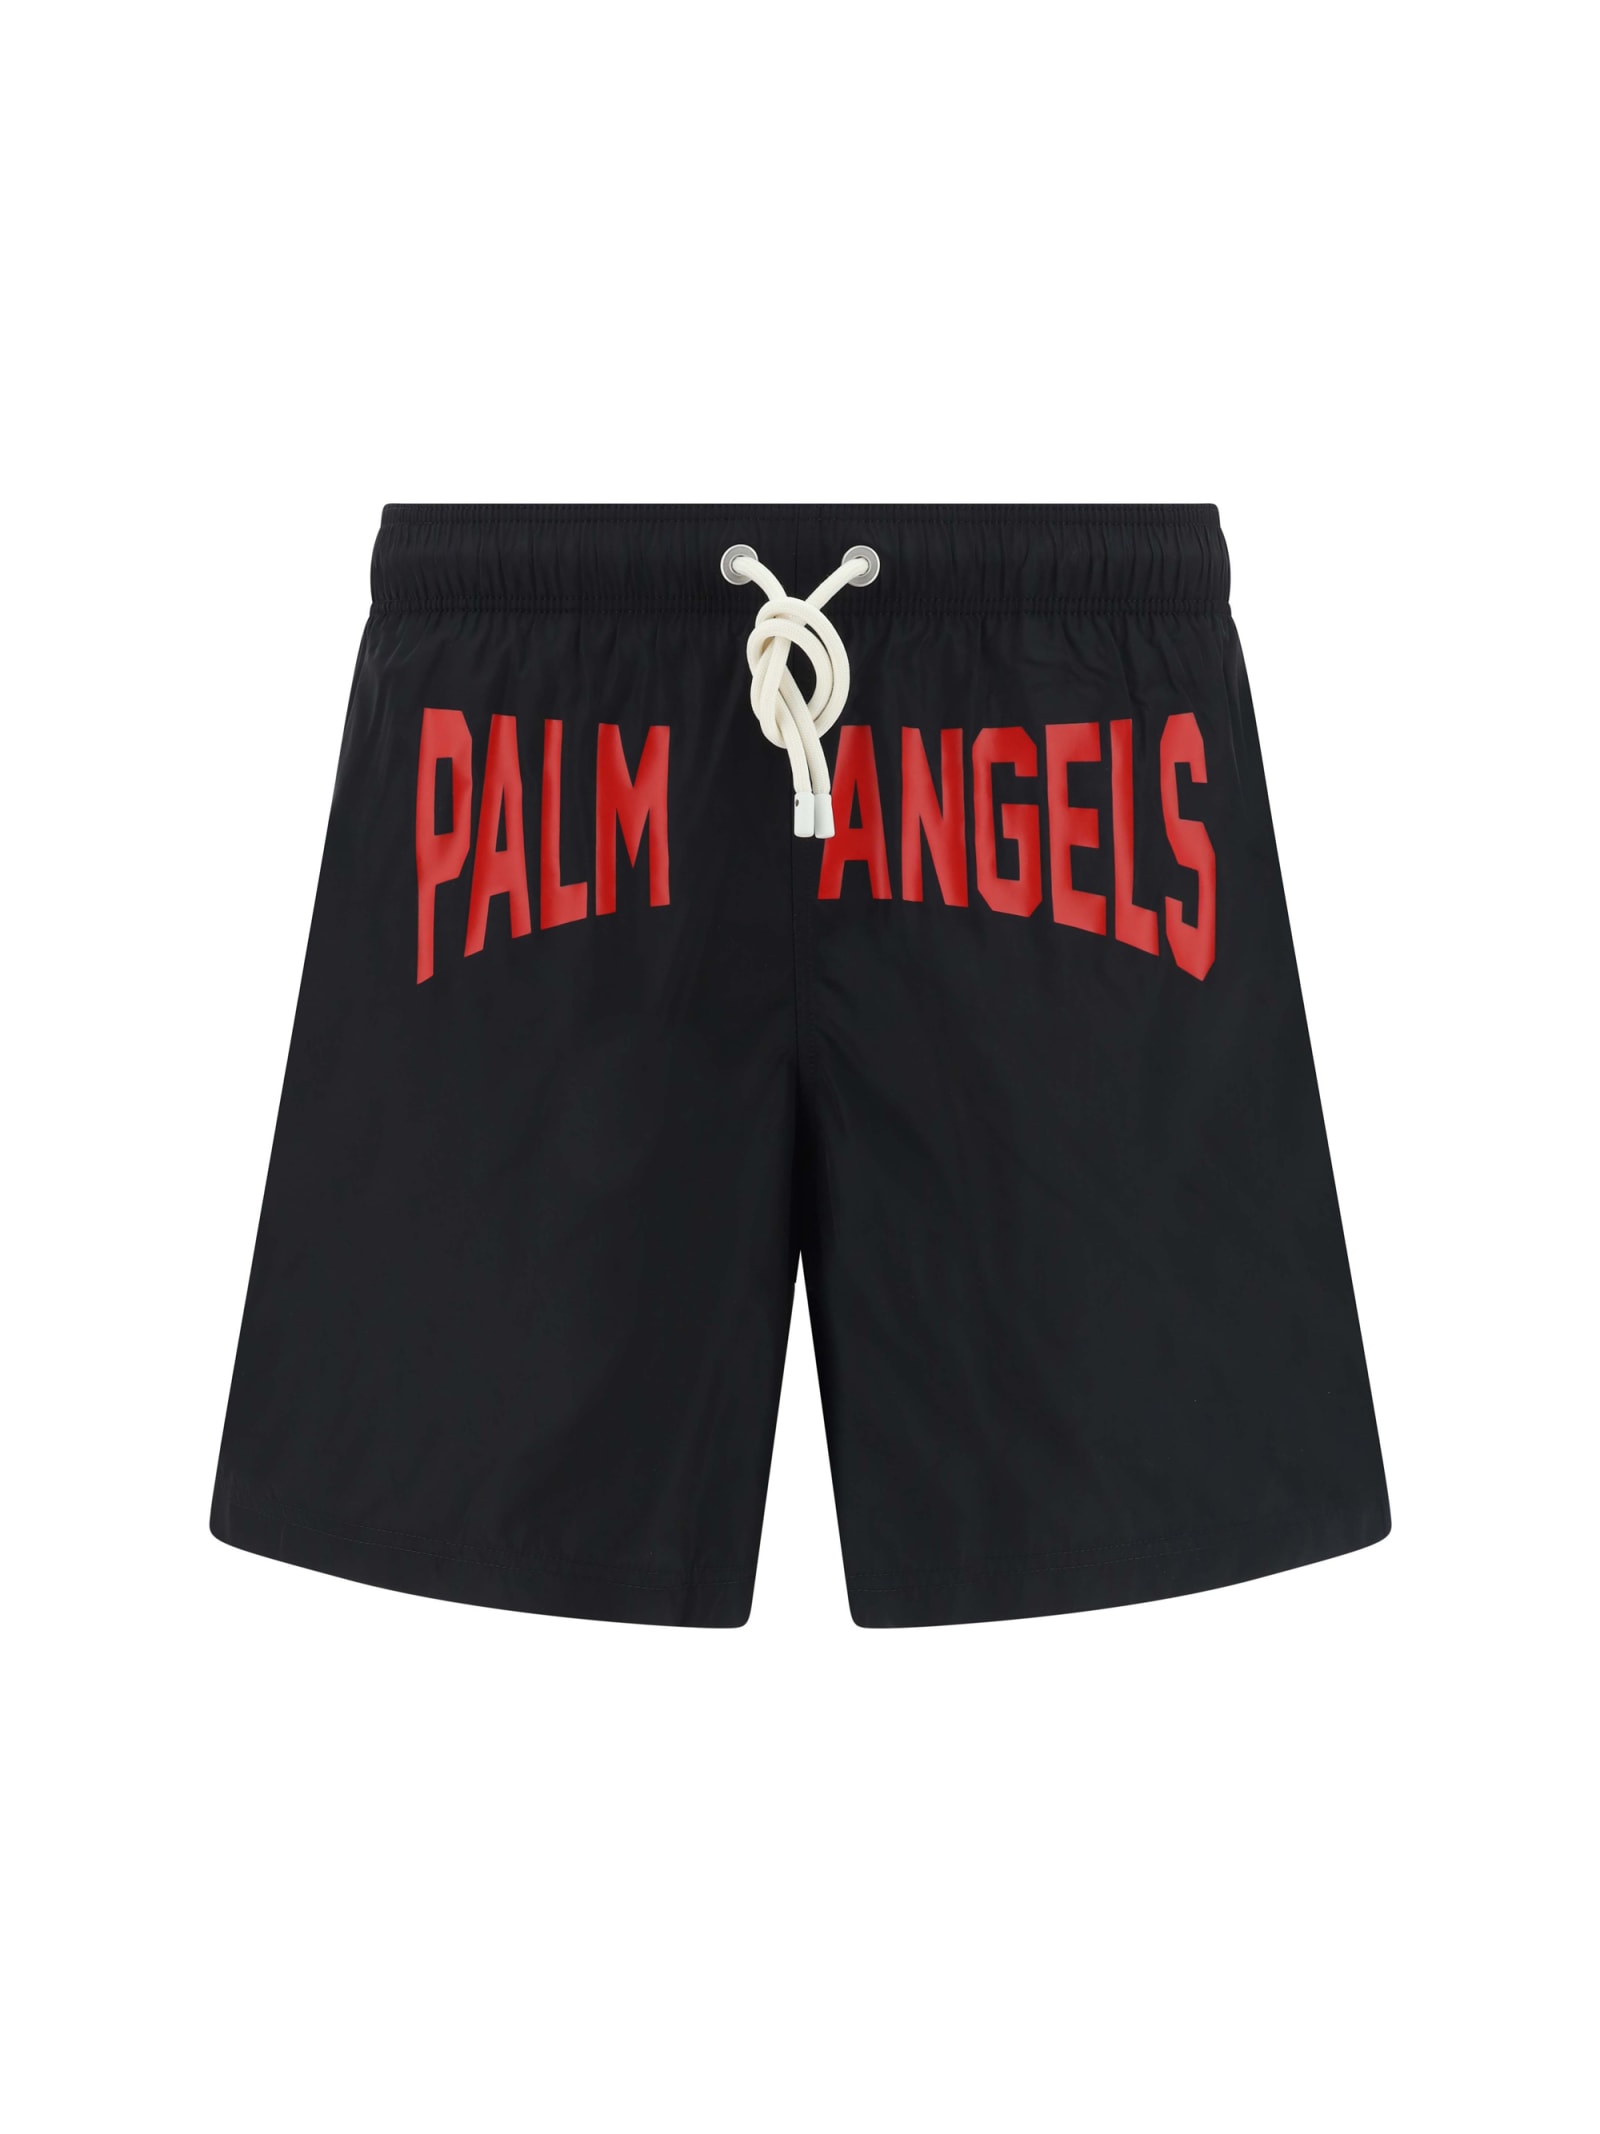 Palm Angels Swimsuit